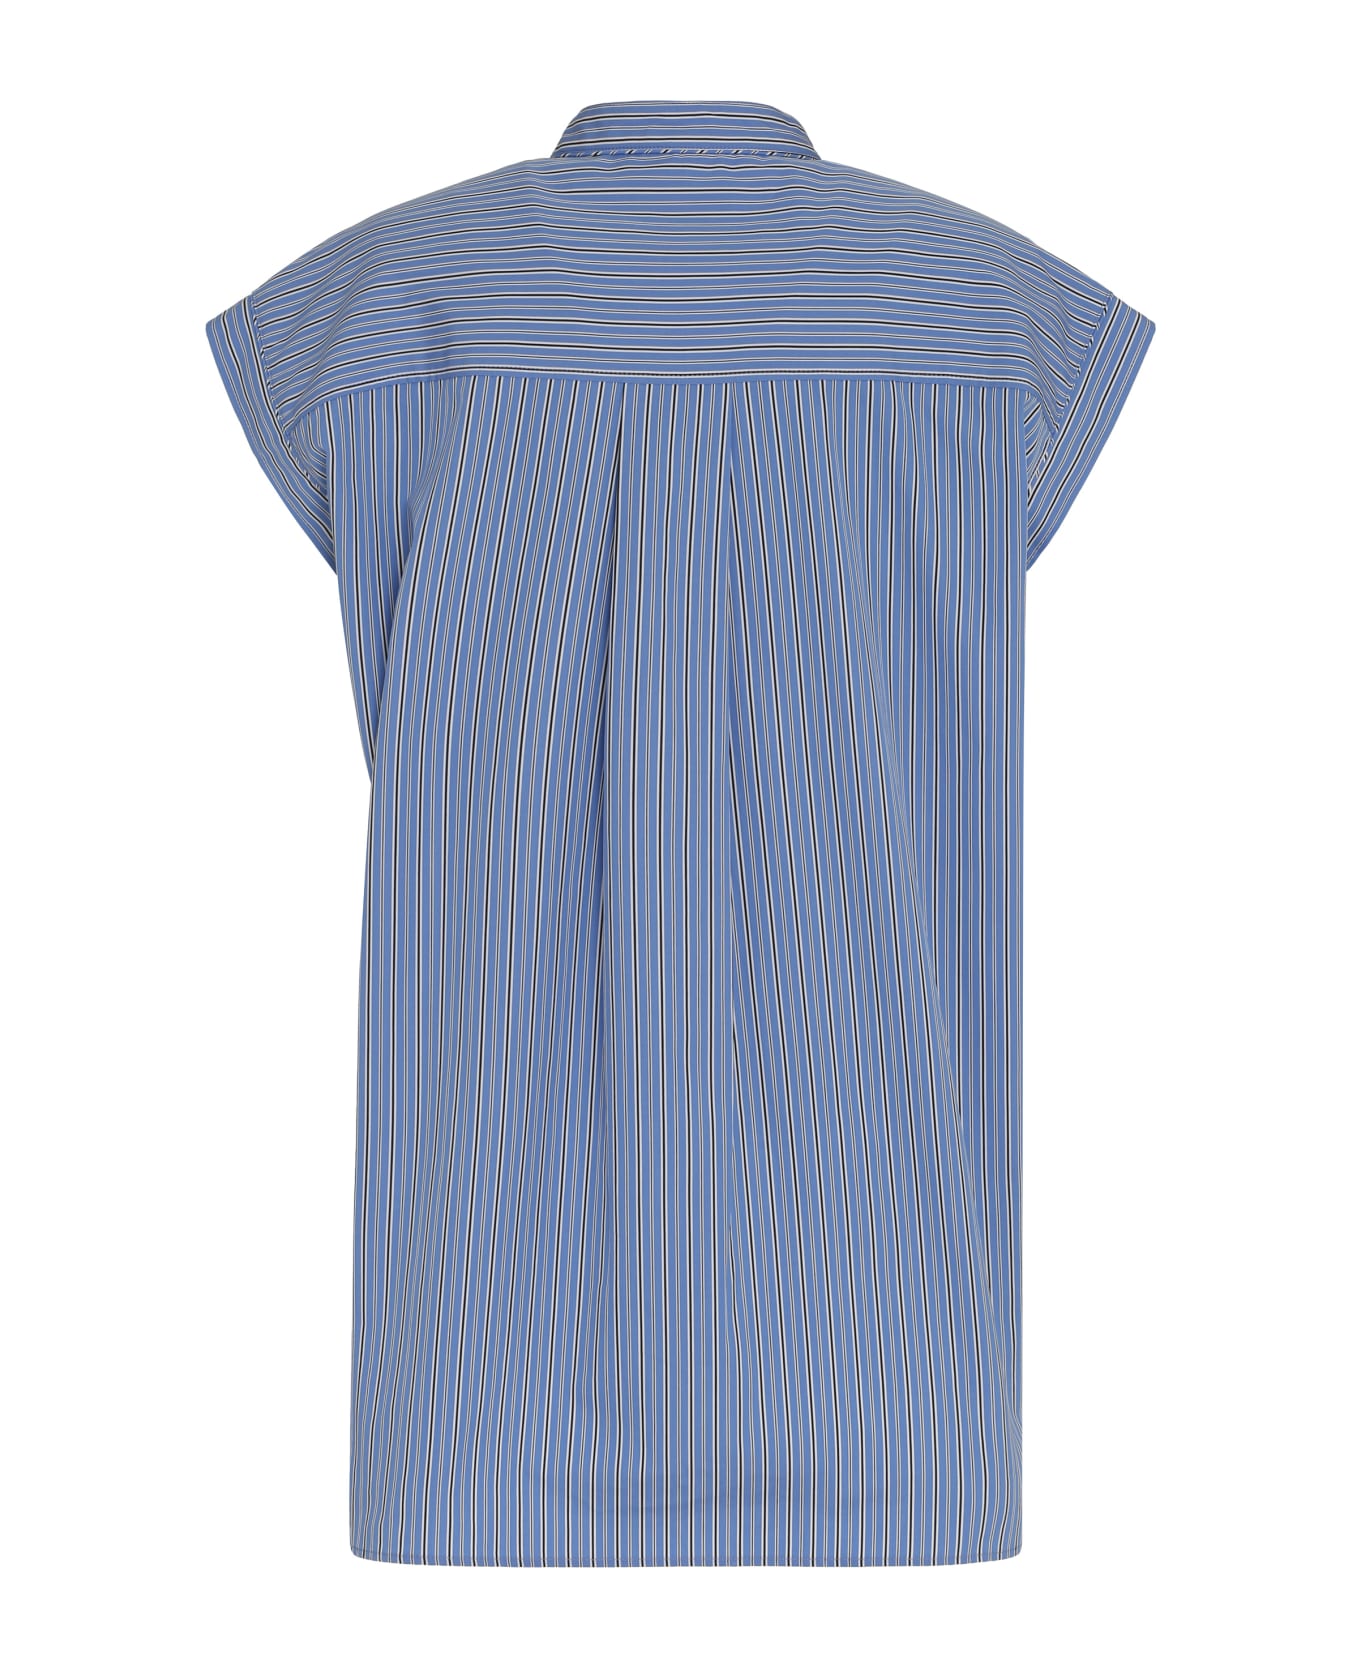 Isabel Marant Reggy Striped Cotton Shirt - Light Blue